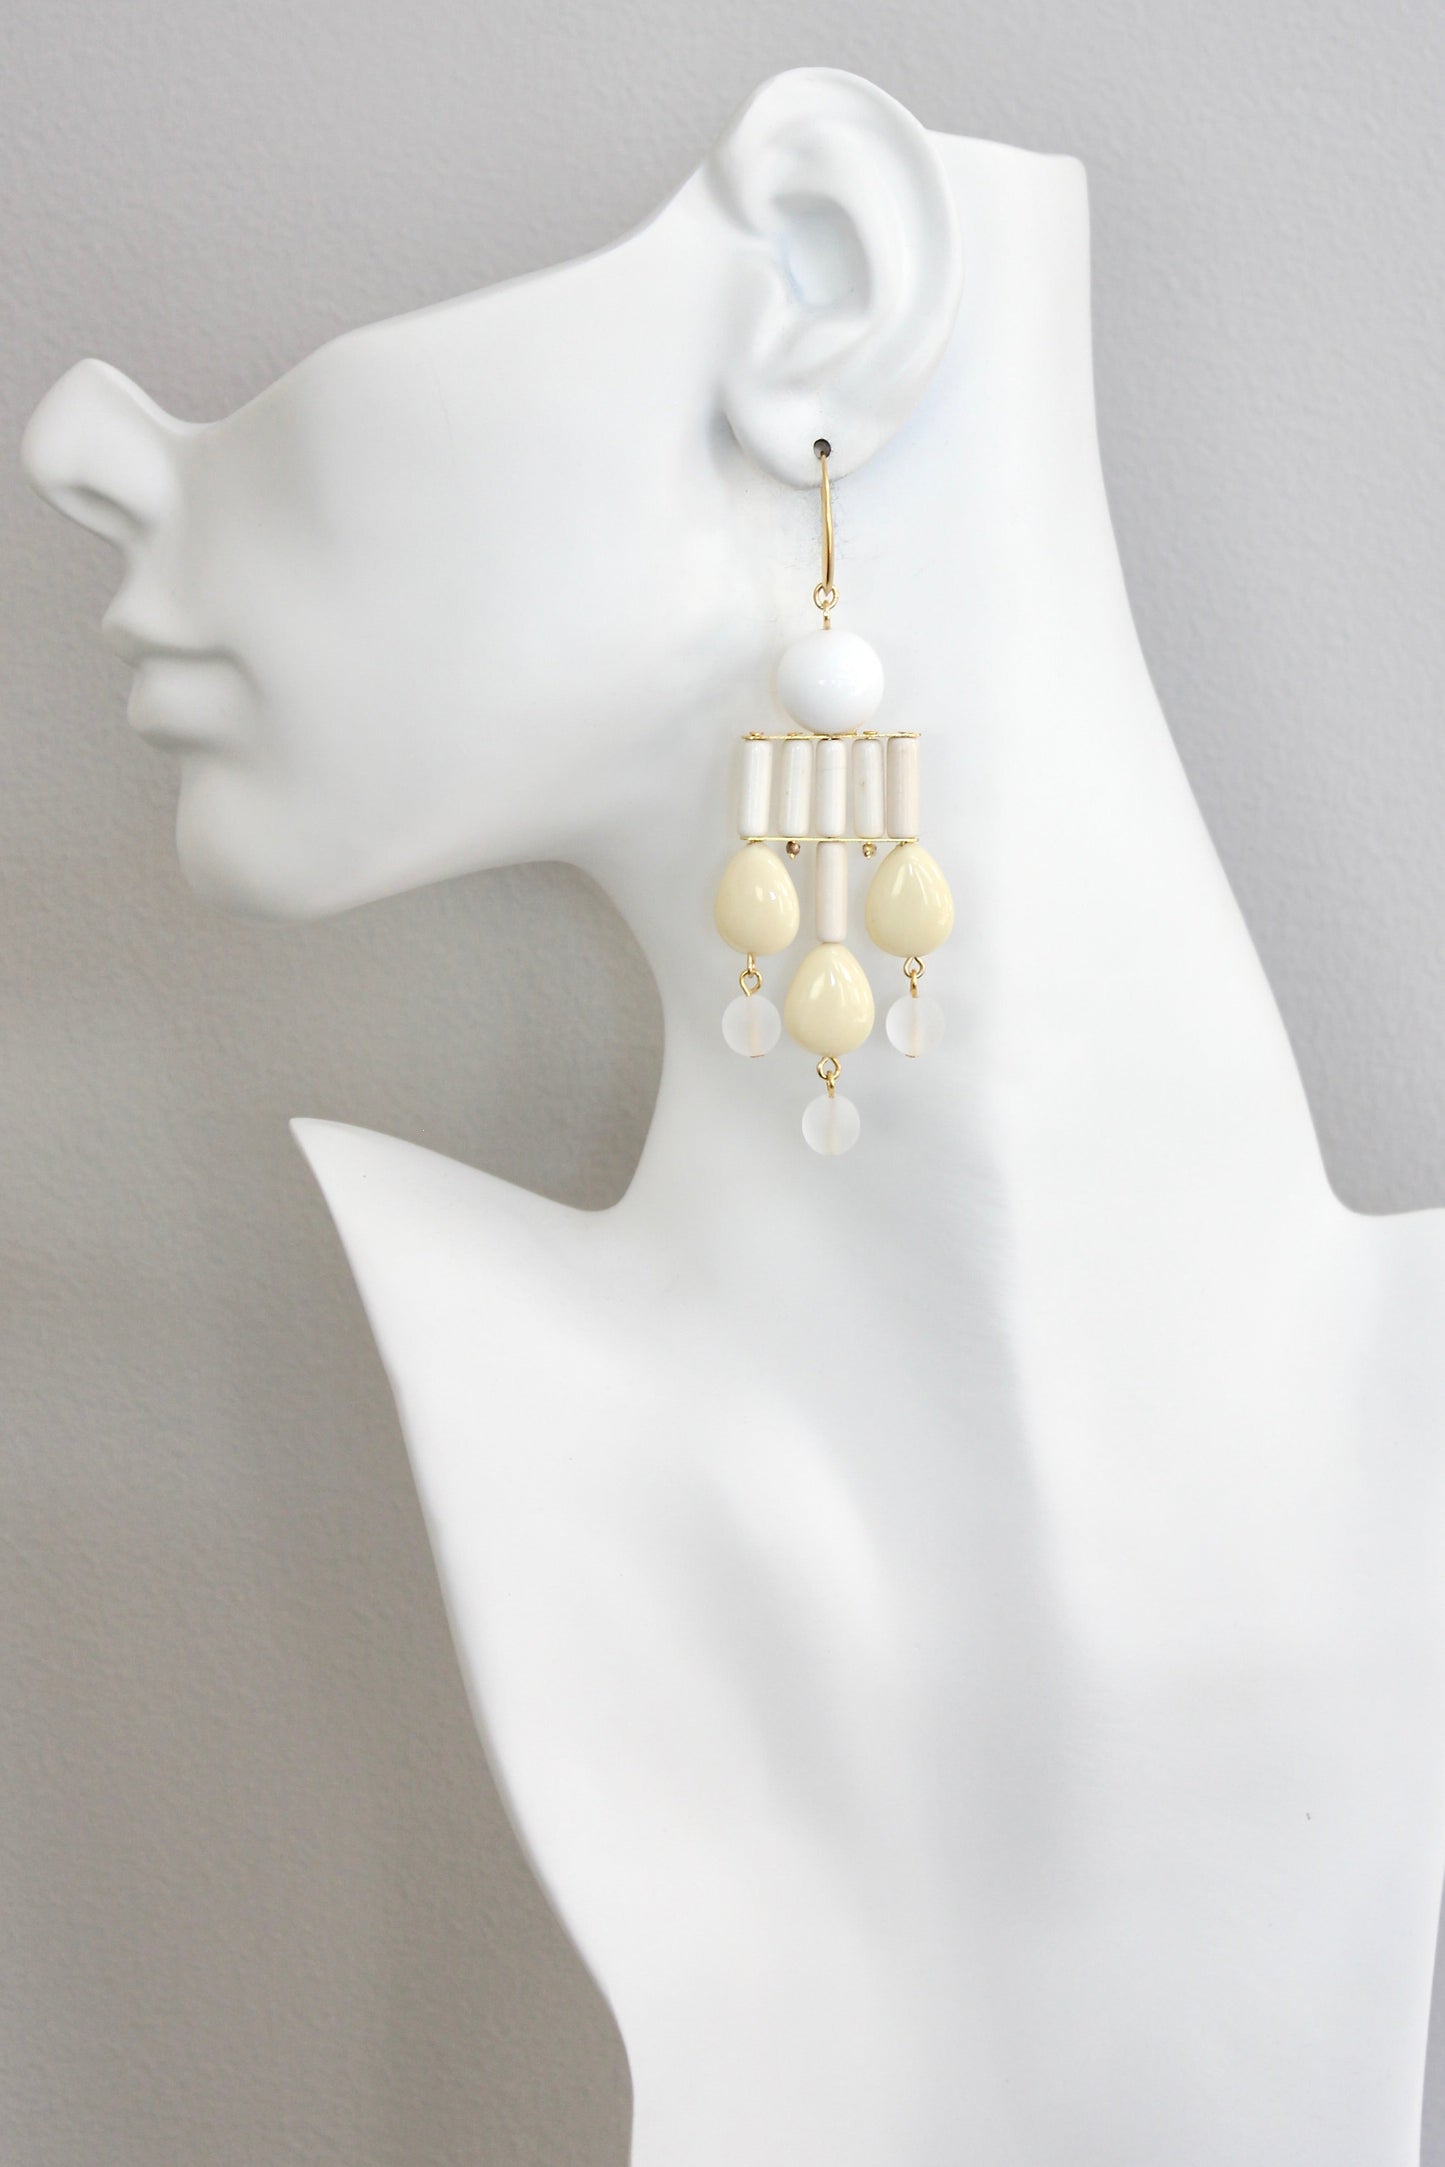 ISLE53 White and light yellow geometric chandelier earrings